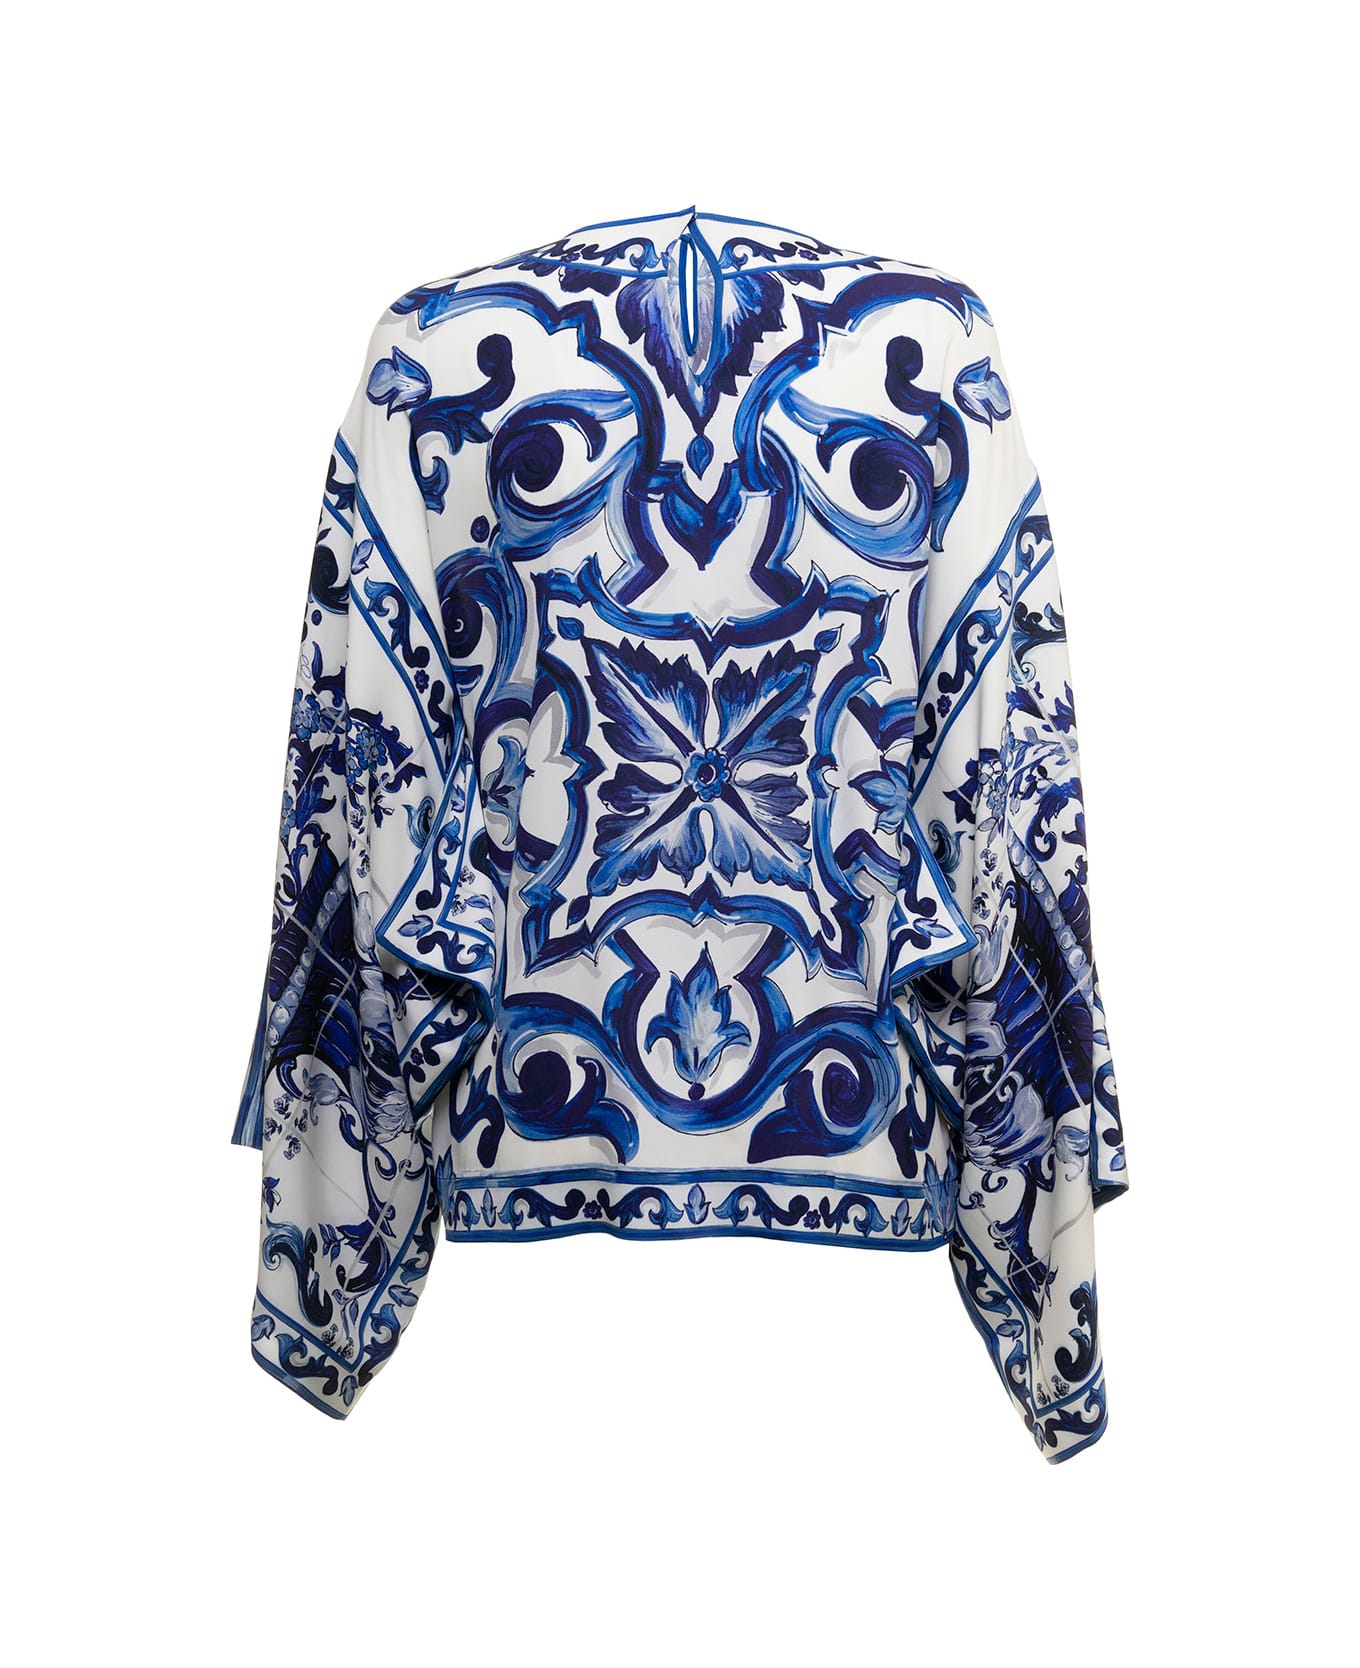 Dolce & Gabbana Woman's Maiolica Printed Silk Shirt Blouse - Tn Blu/bco